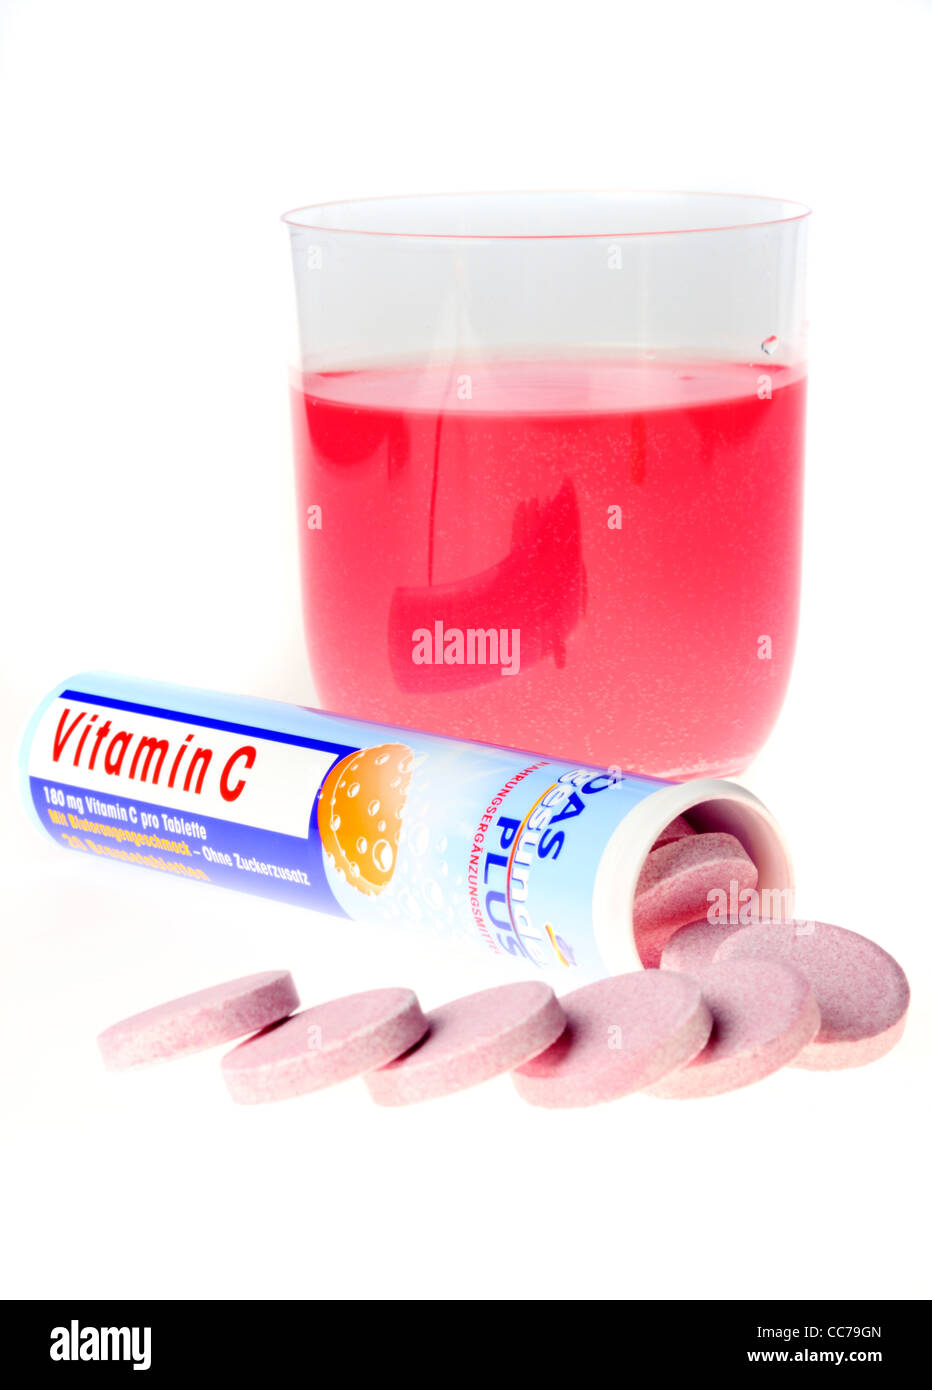 Vitamin C-Brause-Tablette. Stockfoto